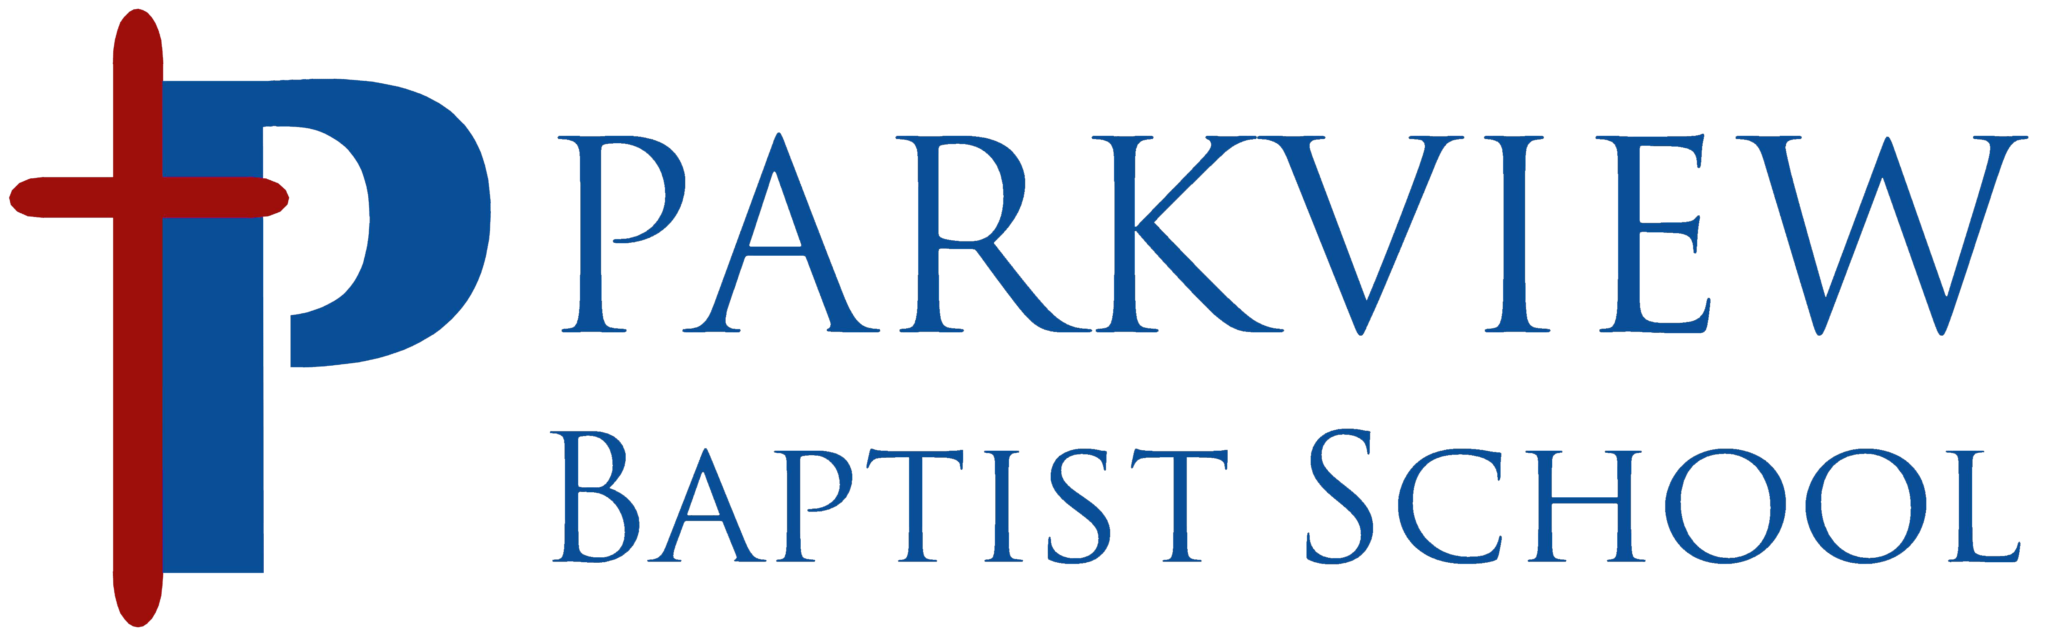 Parkview Baptist School National Alliance Of Christian Schools